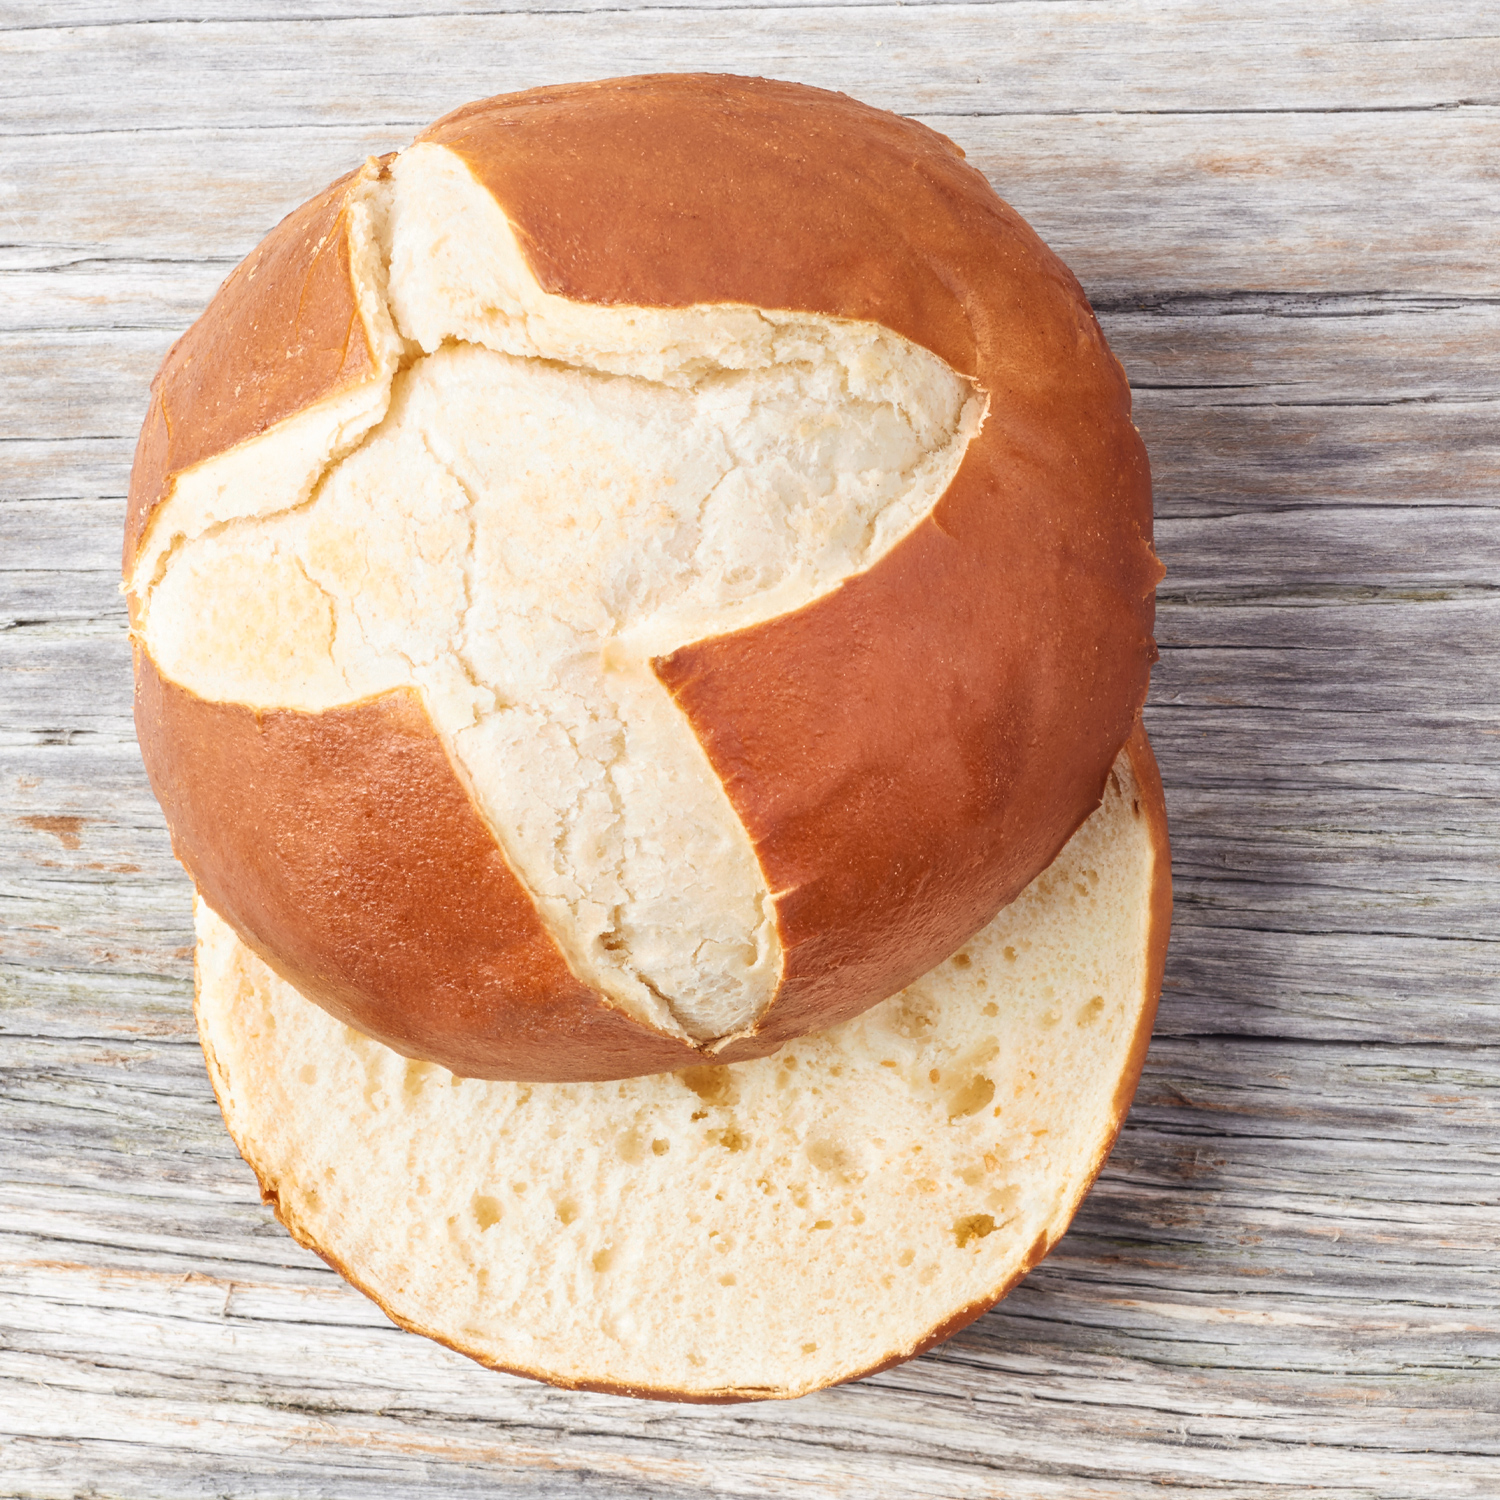 Buy Pretzel Buns Online | Craft-Baked for Burgers & Sandwiches